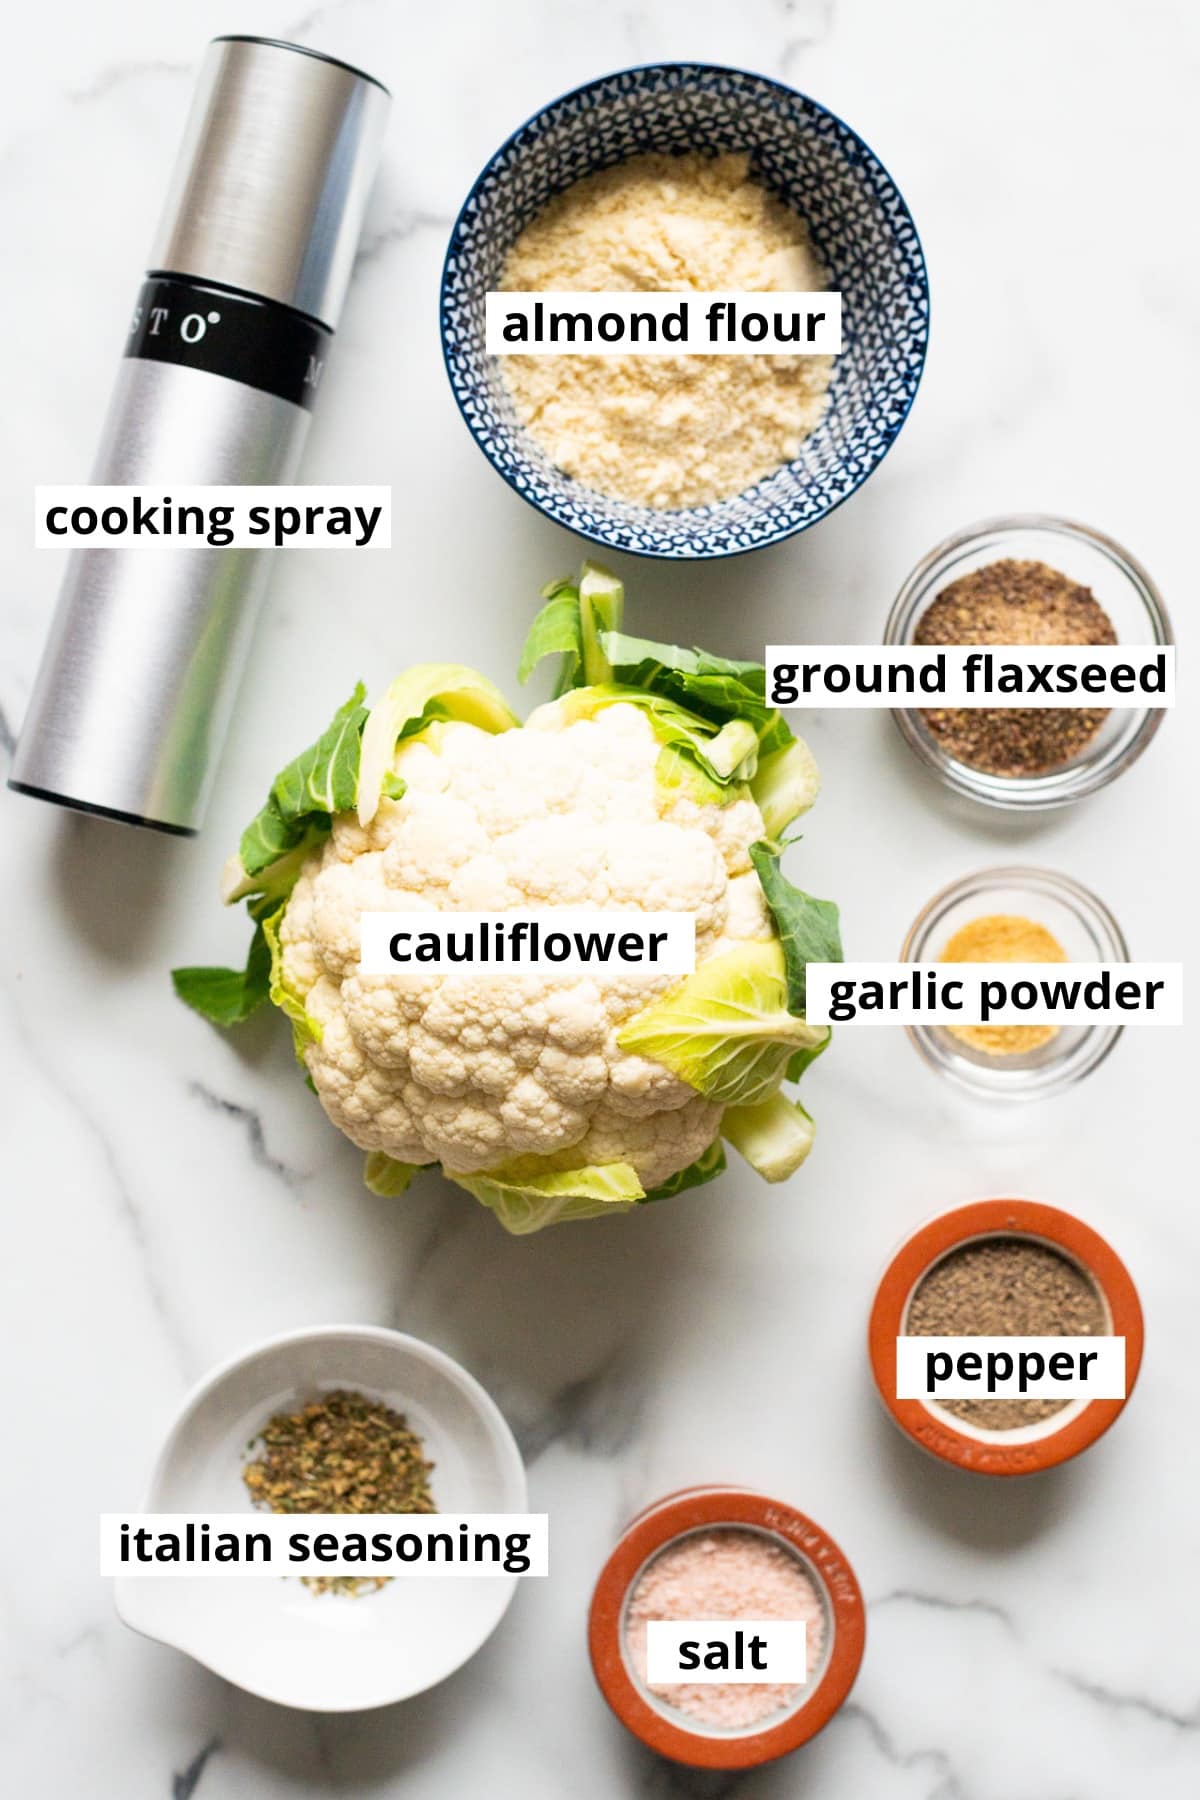 Cauliflower, almond flour, ground flaxseed, garlic powder, cooking spray, Italian seasoning, salt and pepper.